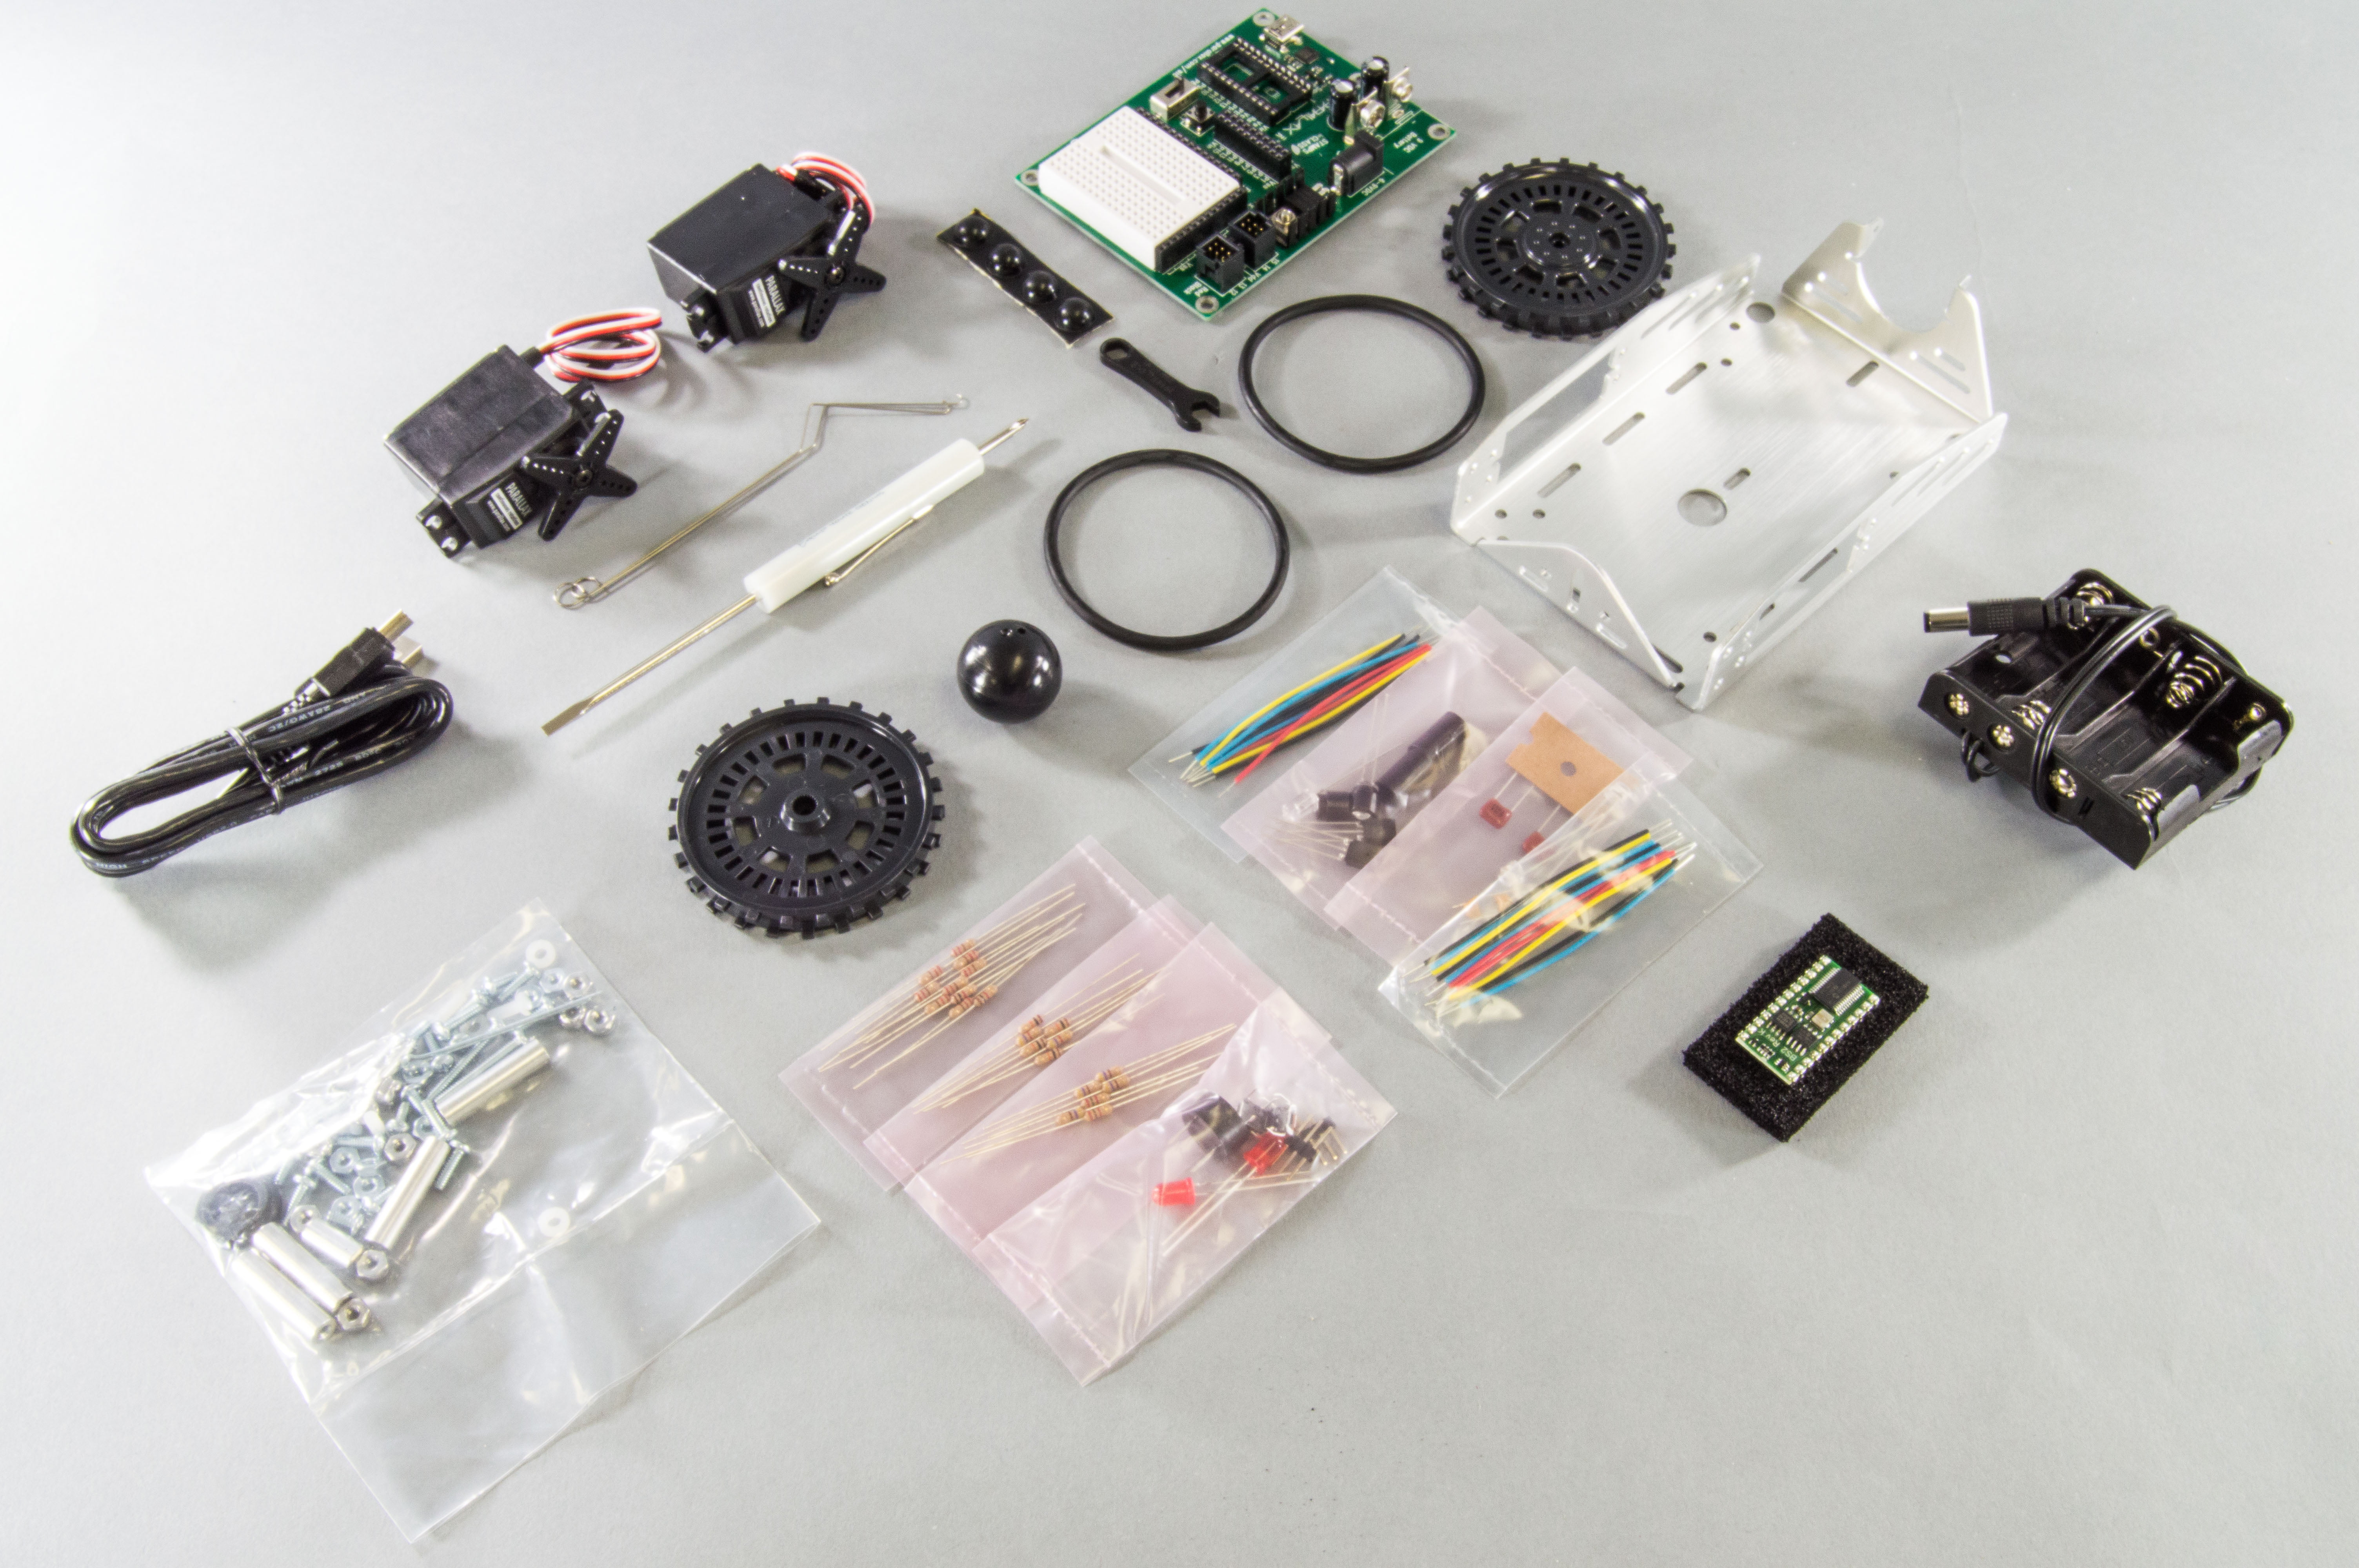 Parallax 28832 Boe-bot Robot Kit USB Version Age 13 for sale online 